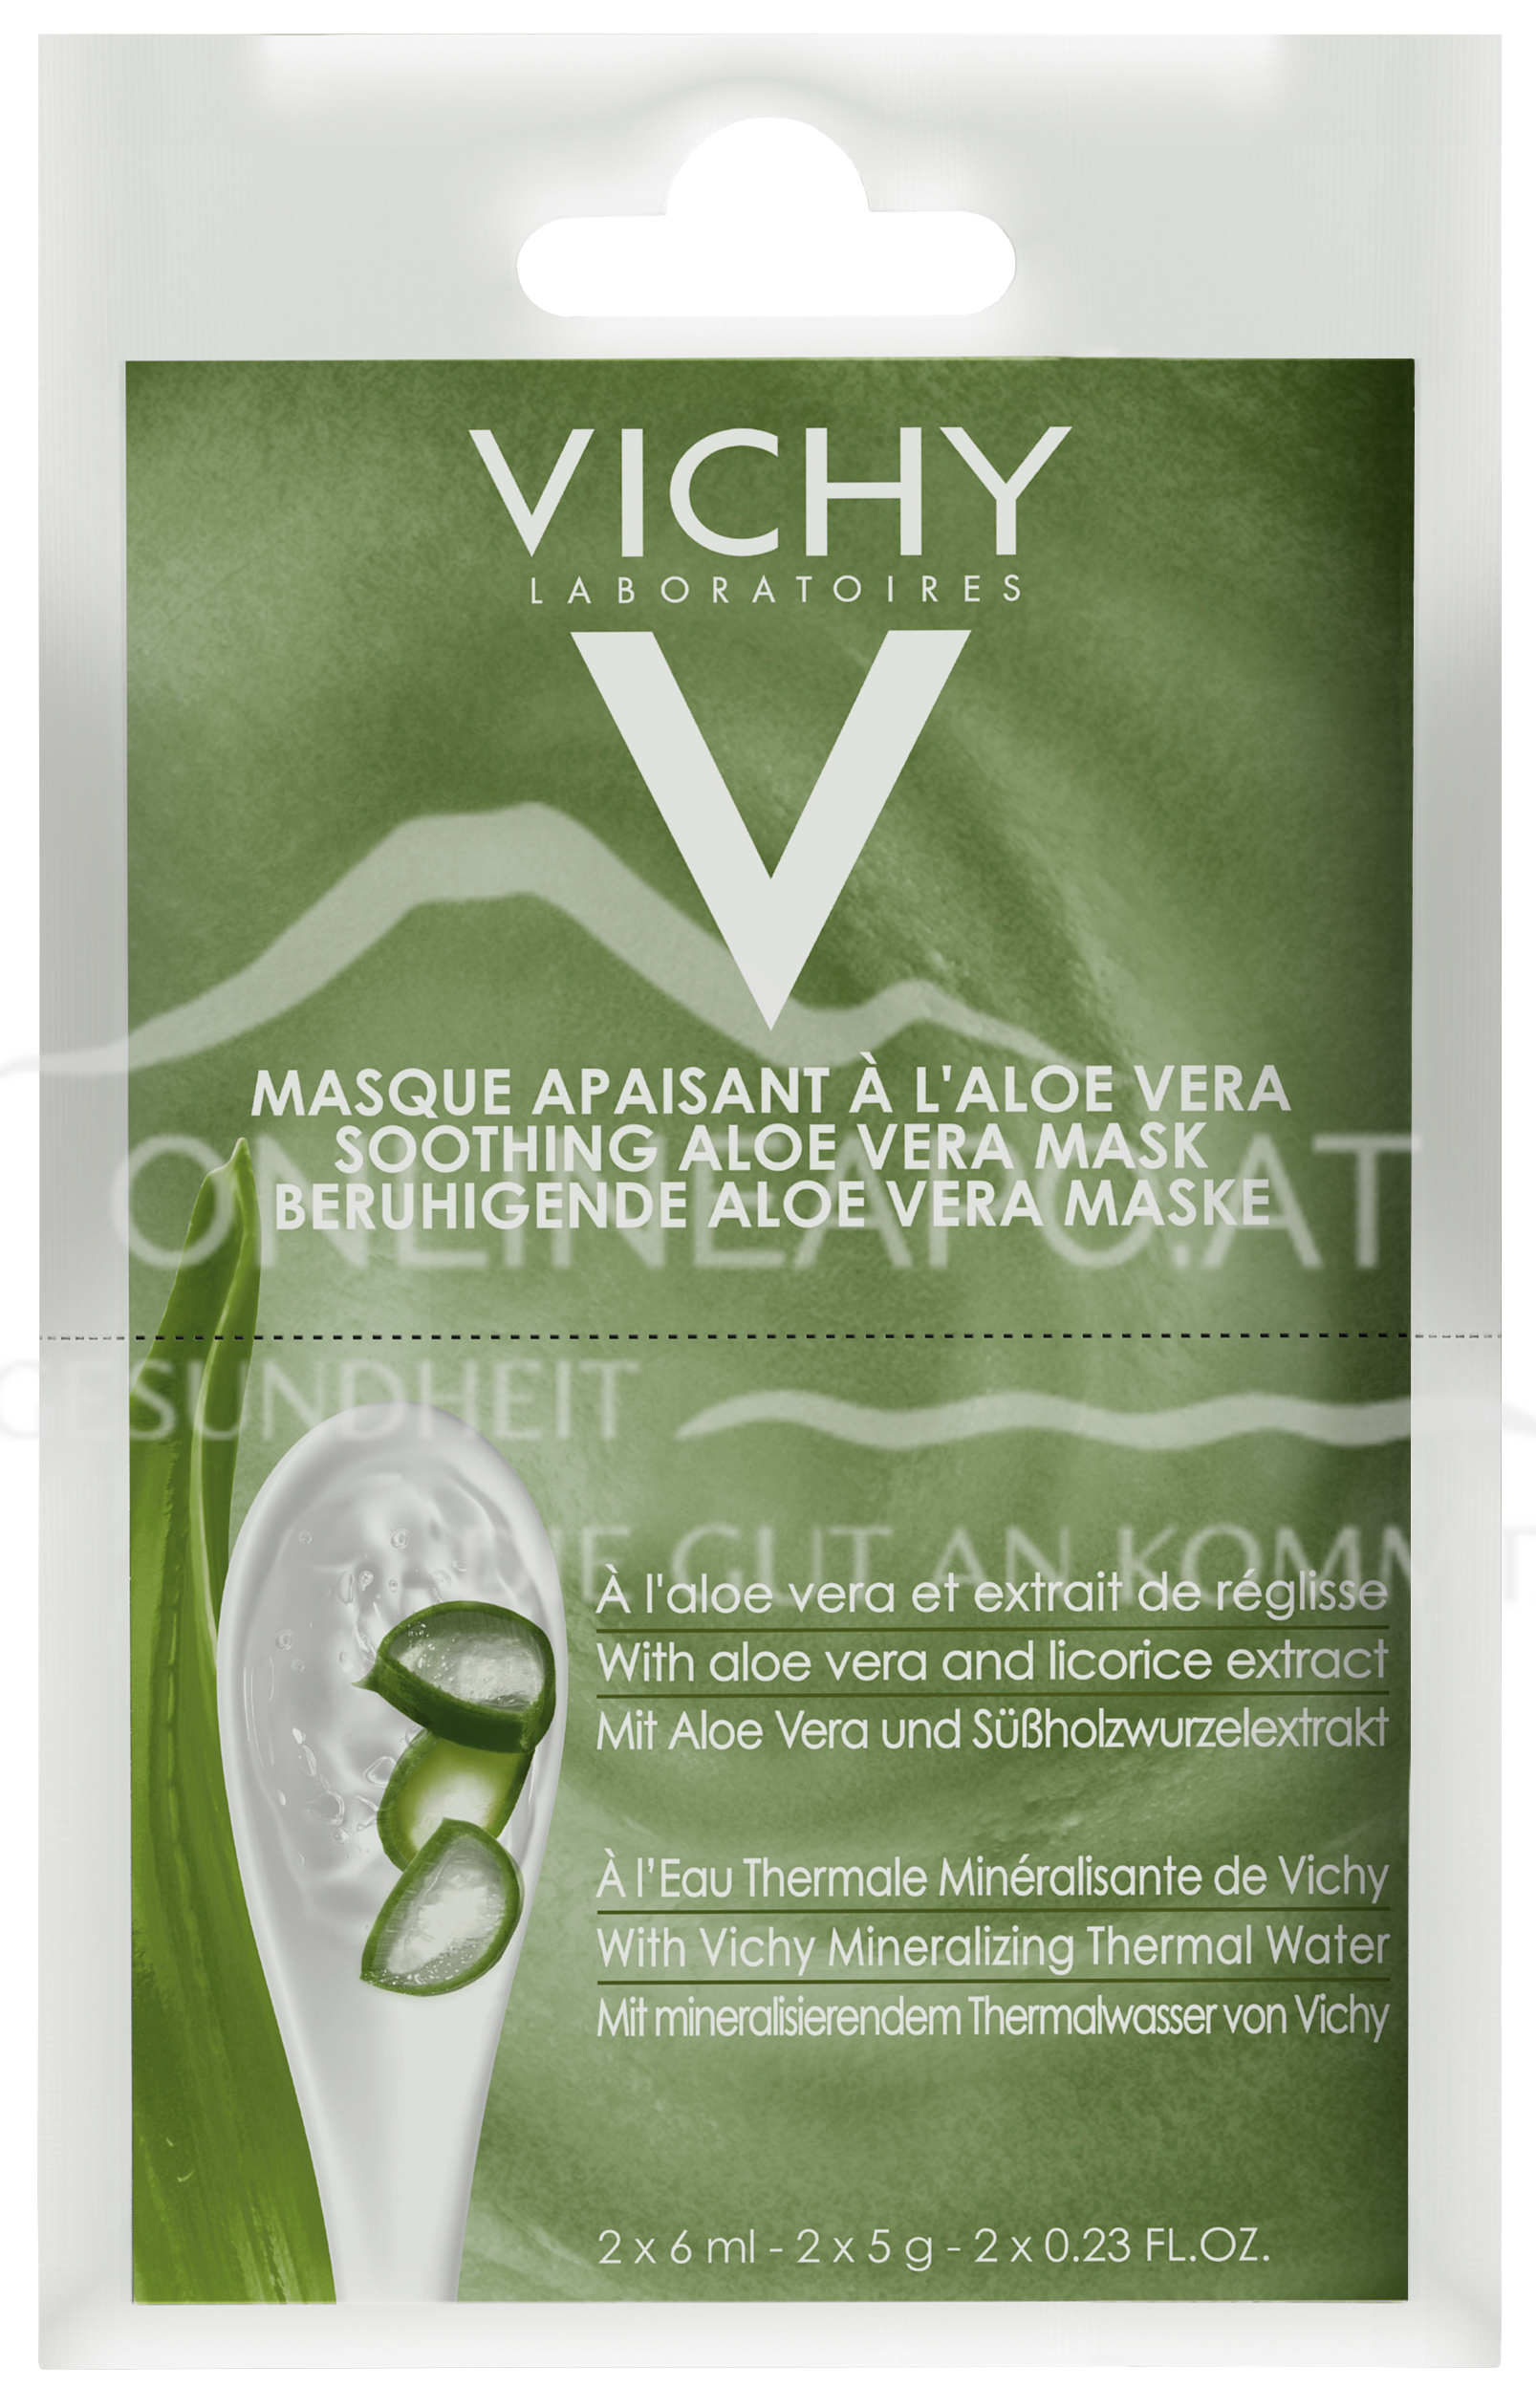 VICHY Beruhigende Aloe Vera Maske Duo-Sachet 2x6ml